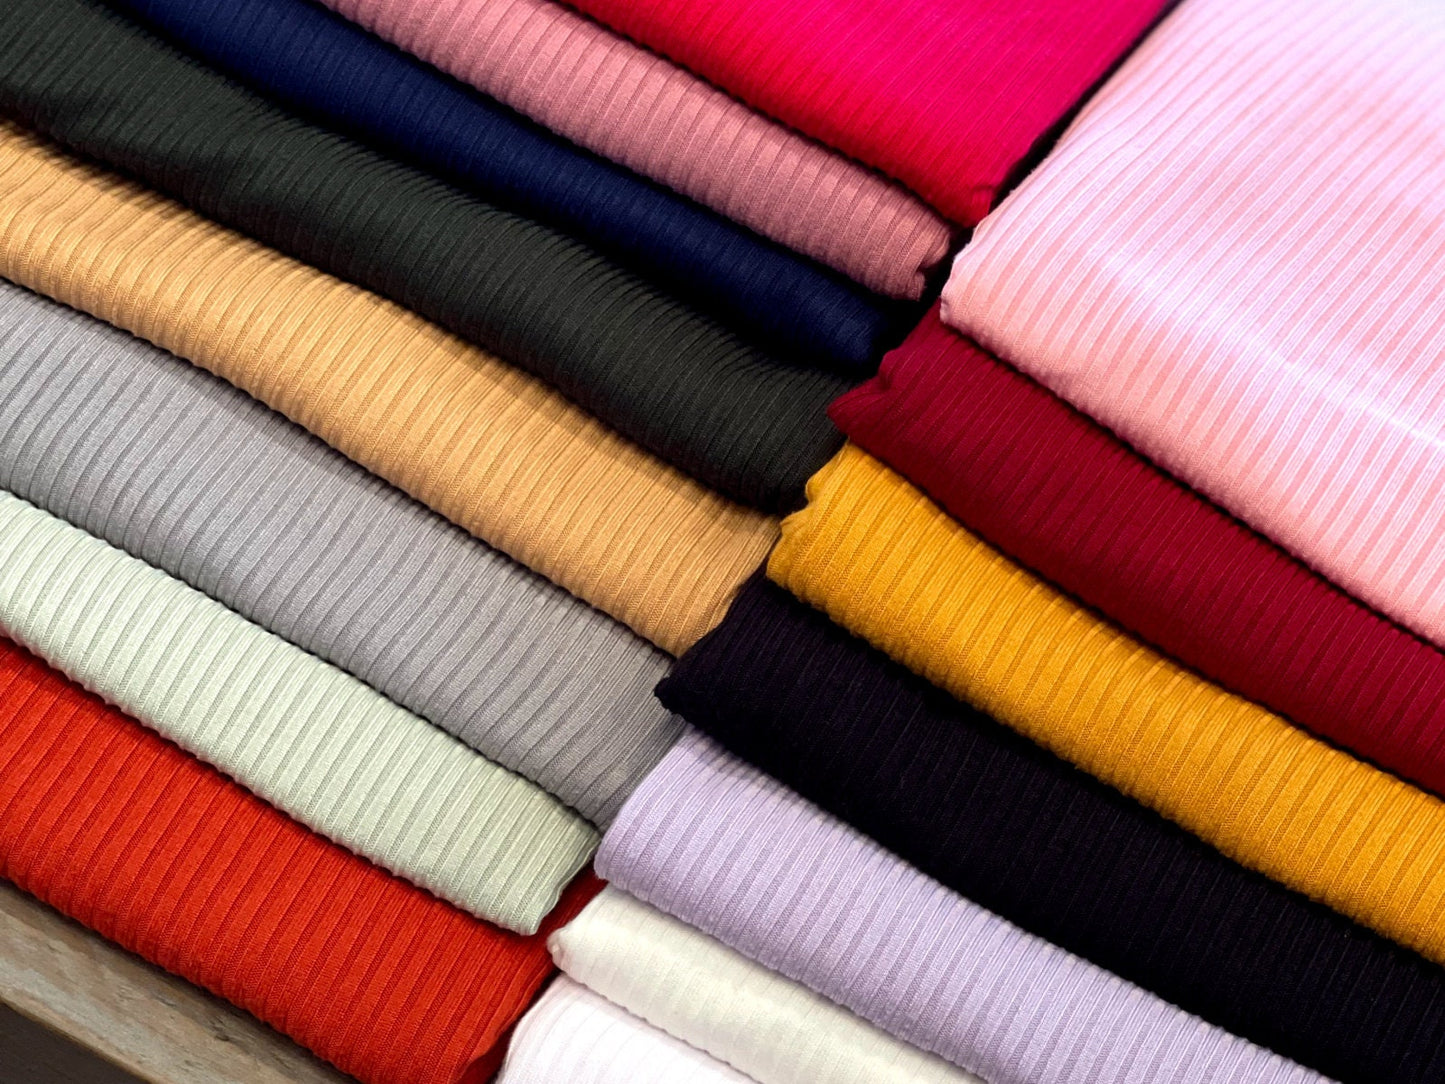 Raspberry  Rib Knit Fabric by the Yard Ribbed Jersey Stretchy Soft Polyester Stretch Fabric 1 Yard